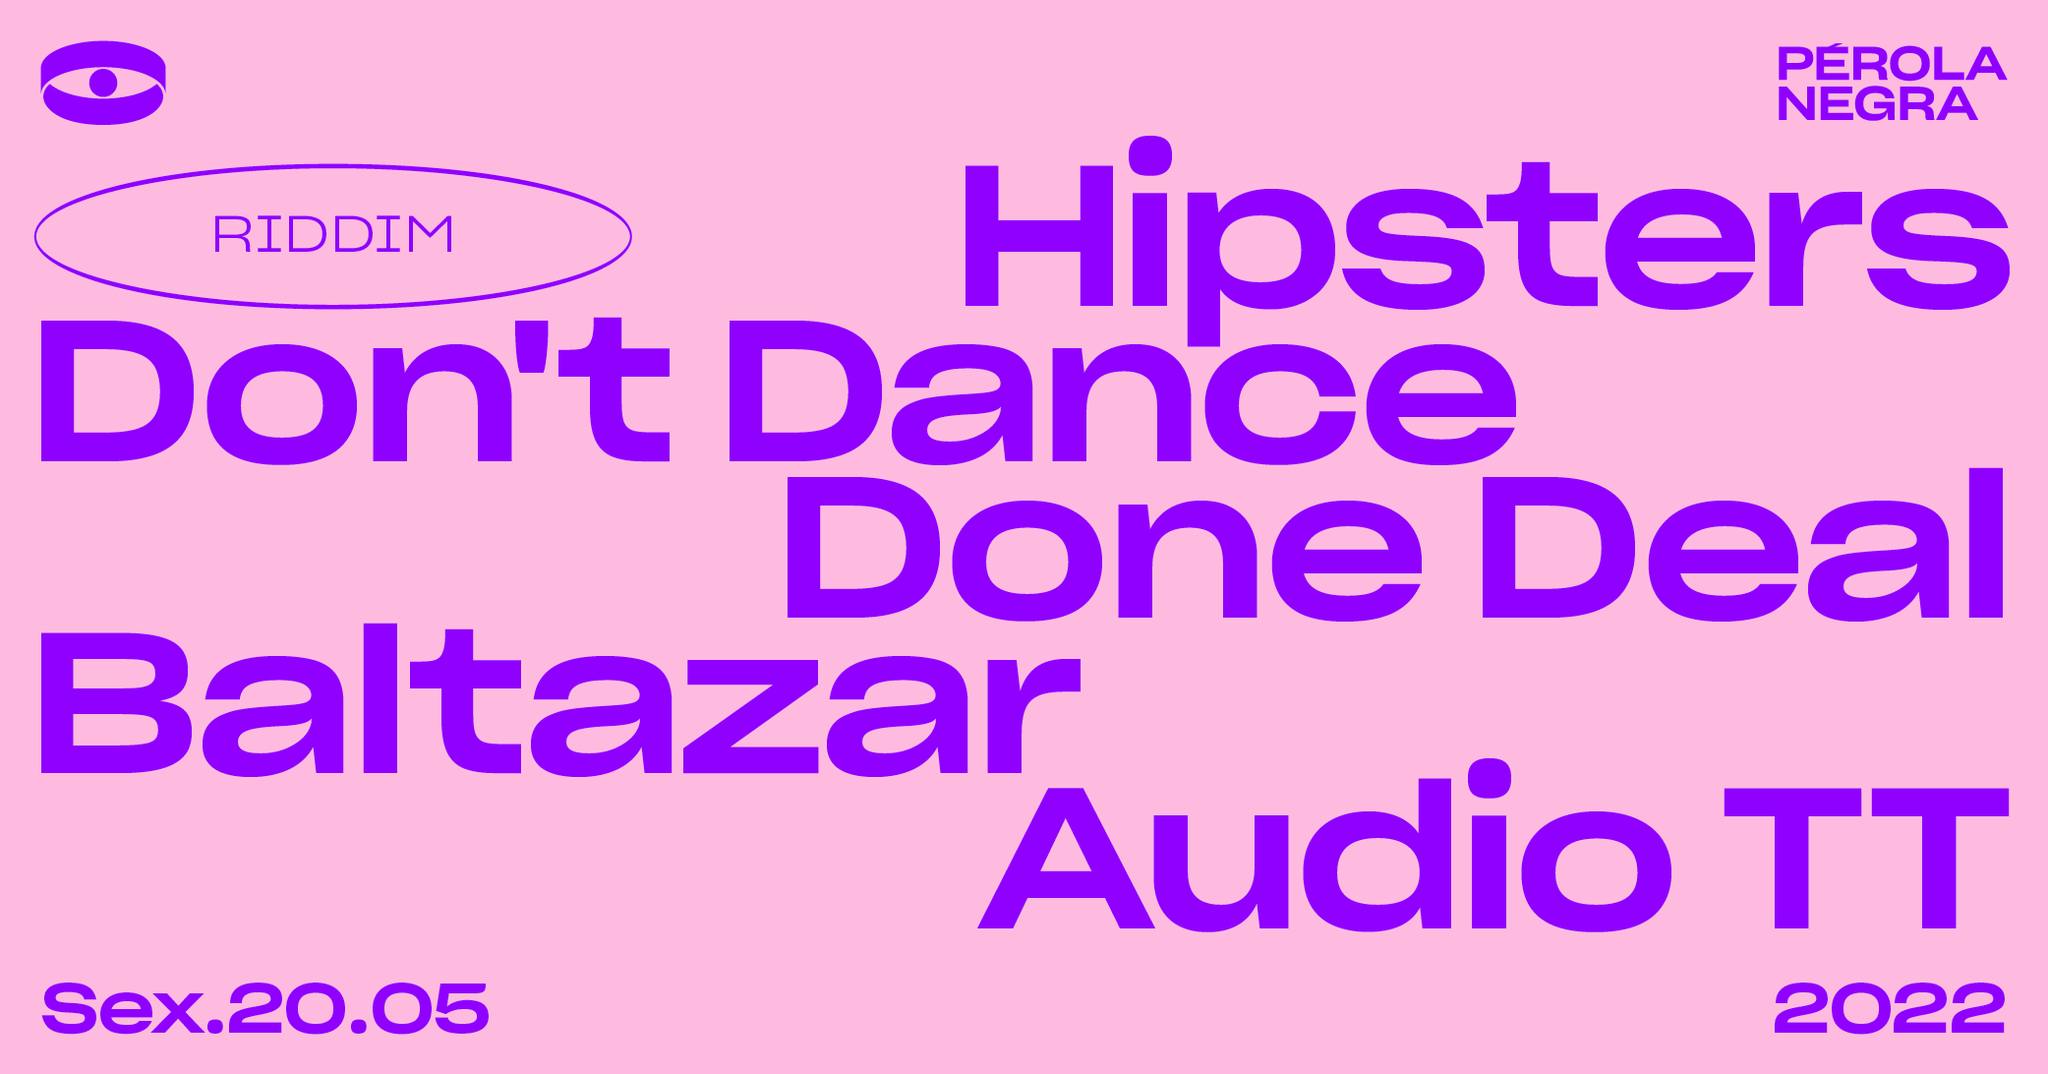 Riddim - Hipsters Don’t Dance, Done Deal, Baltazar, Audio TT